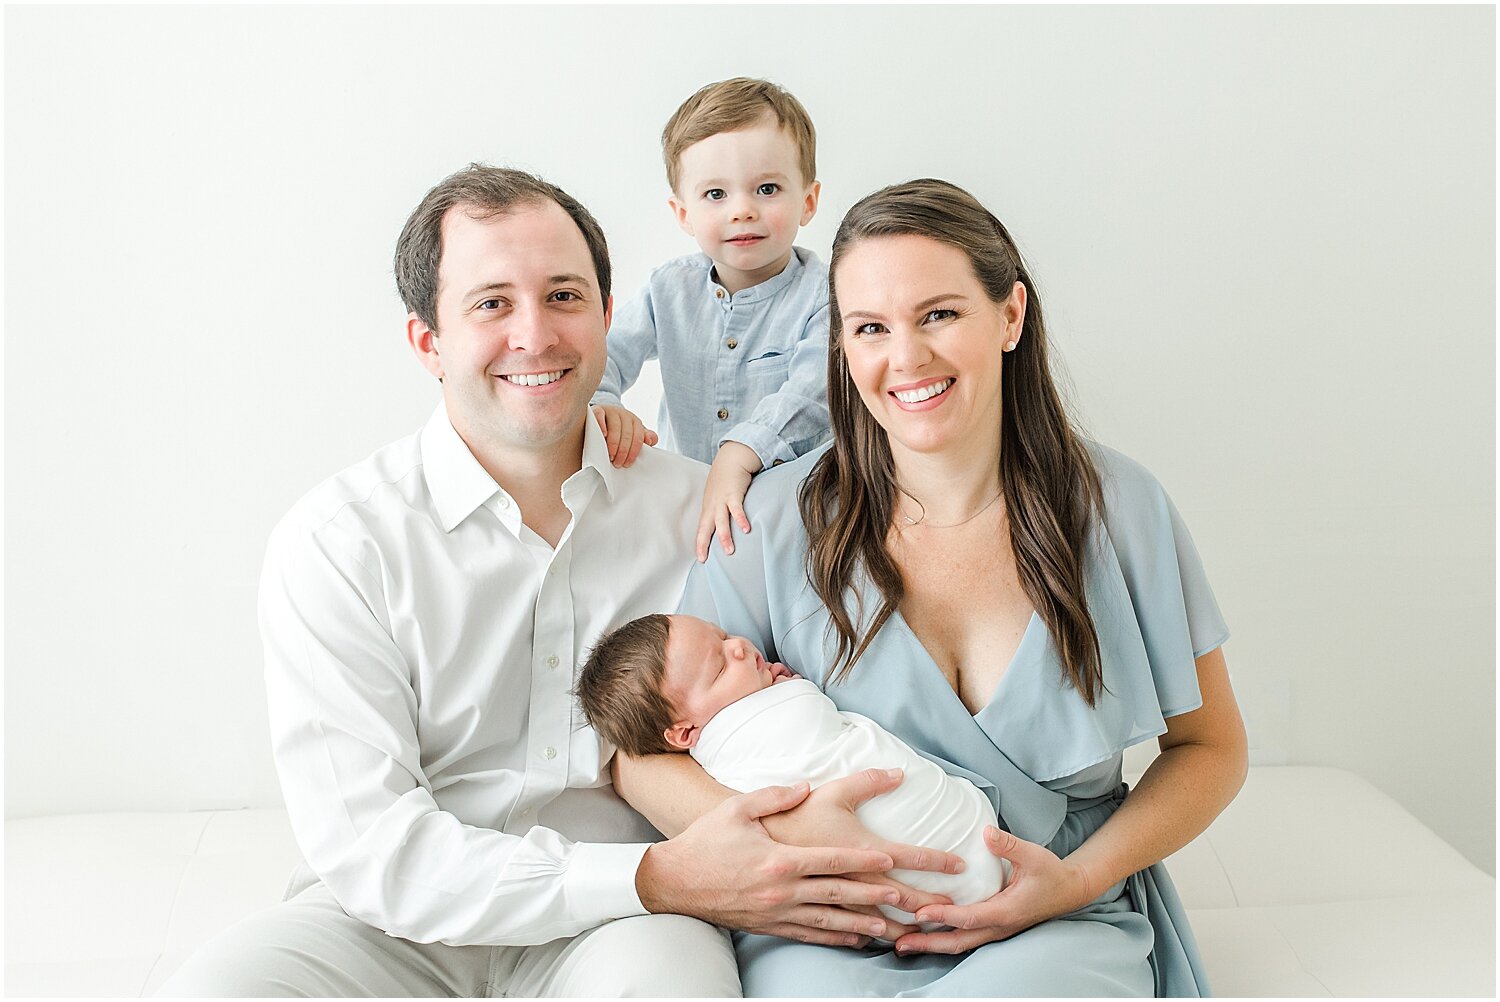 Family newborn photos in Darien, CT Newborn Studio. Photos by Kristin Wood Photography.